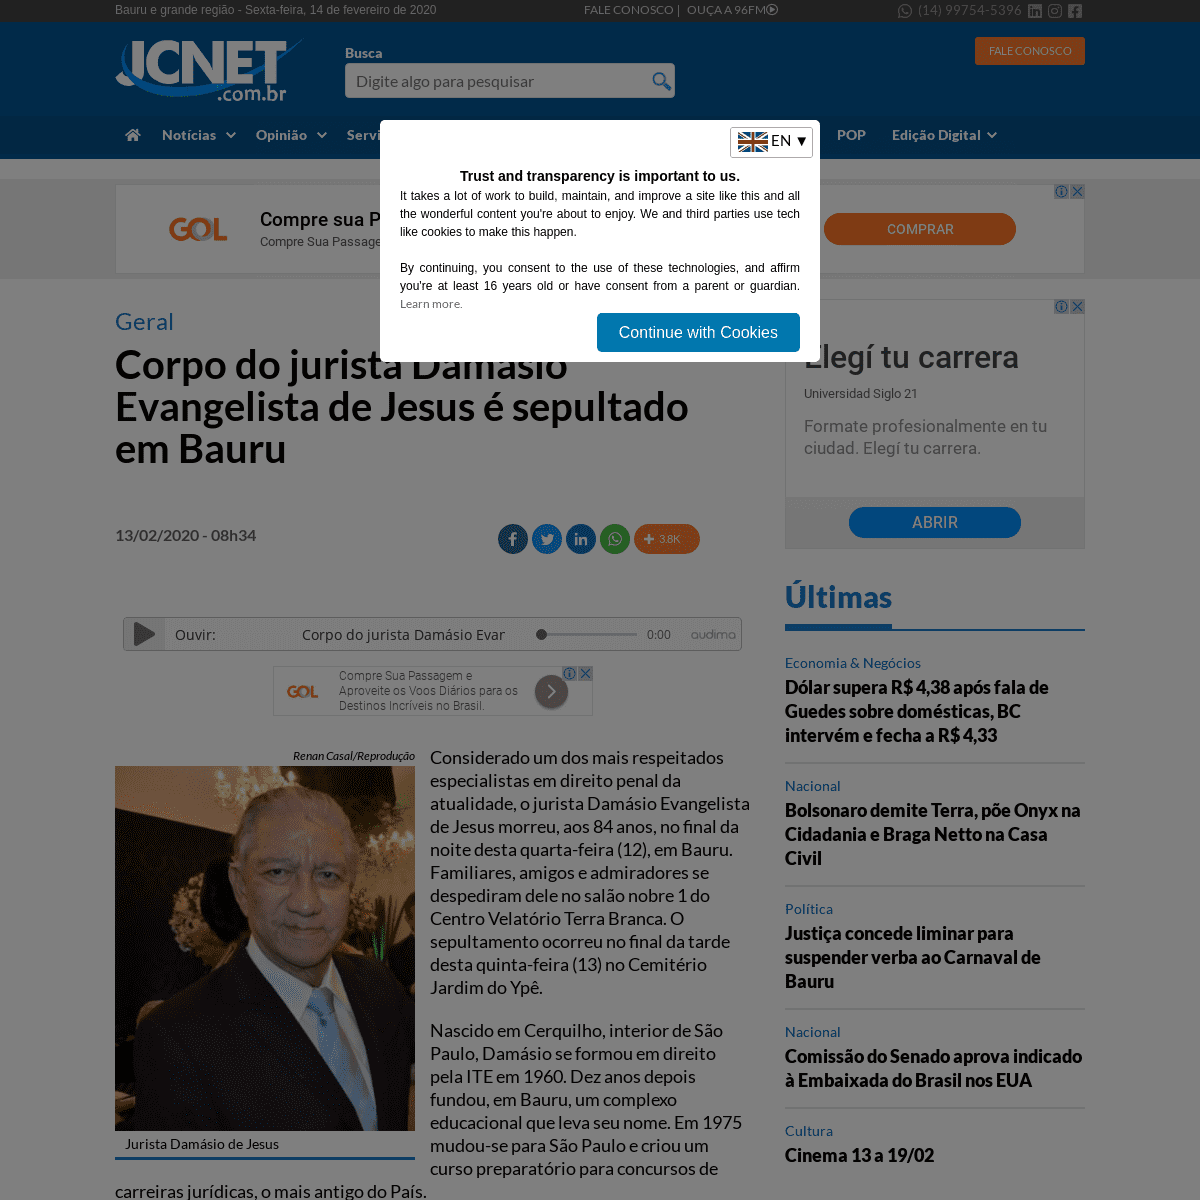 A complete backup of www.jcnet.com.br/noticias/geral/2020/02/714237-morre-o-jurista-damasio-evangelista-de-jesus.html